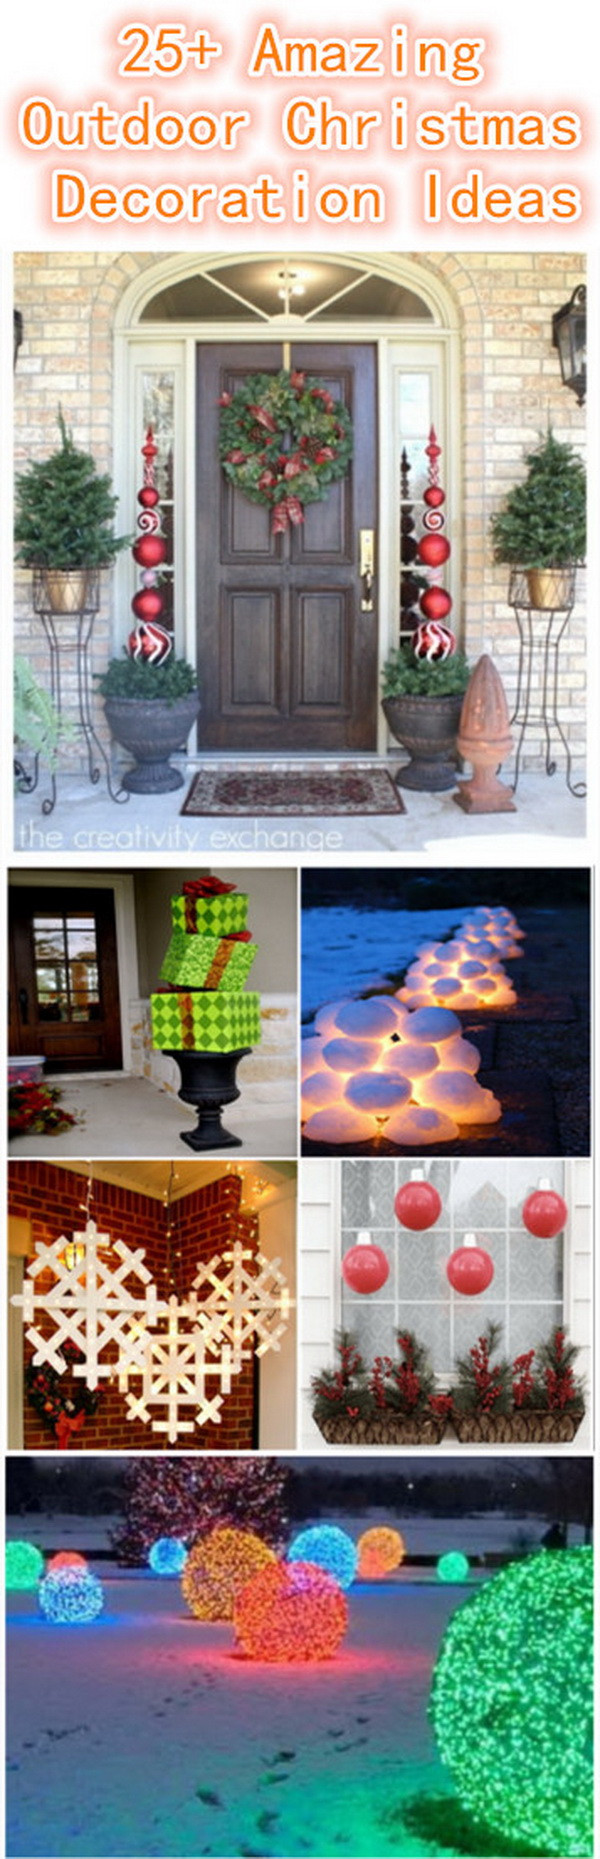 DIY Outdoor Christmas
 30 Amazing DIY Outdoor Christmas Decoration Ideas For